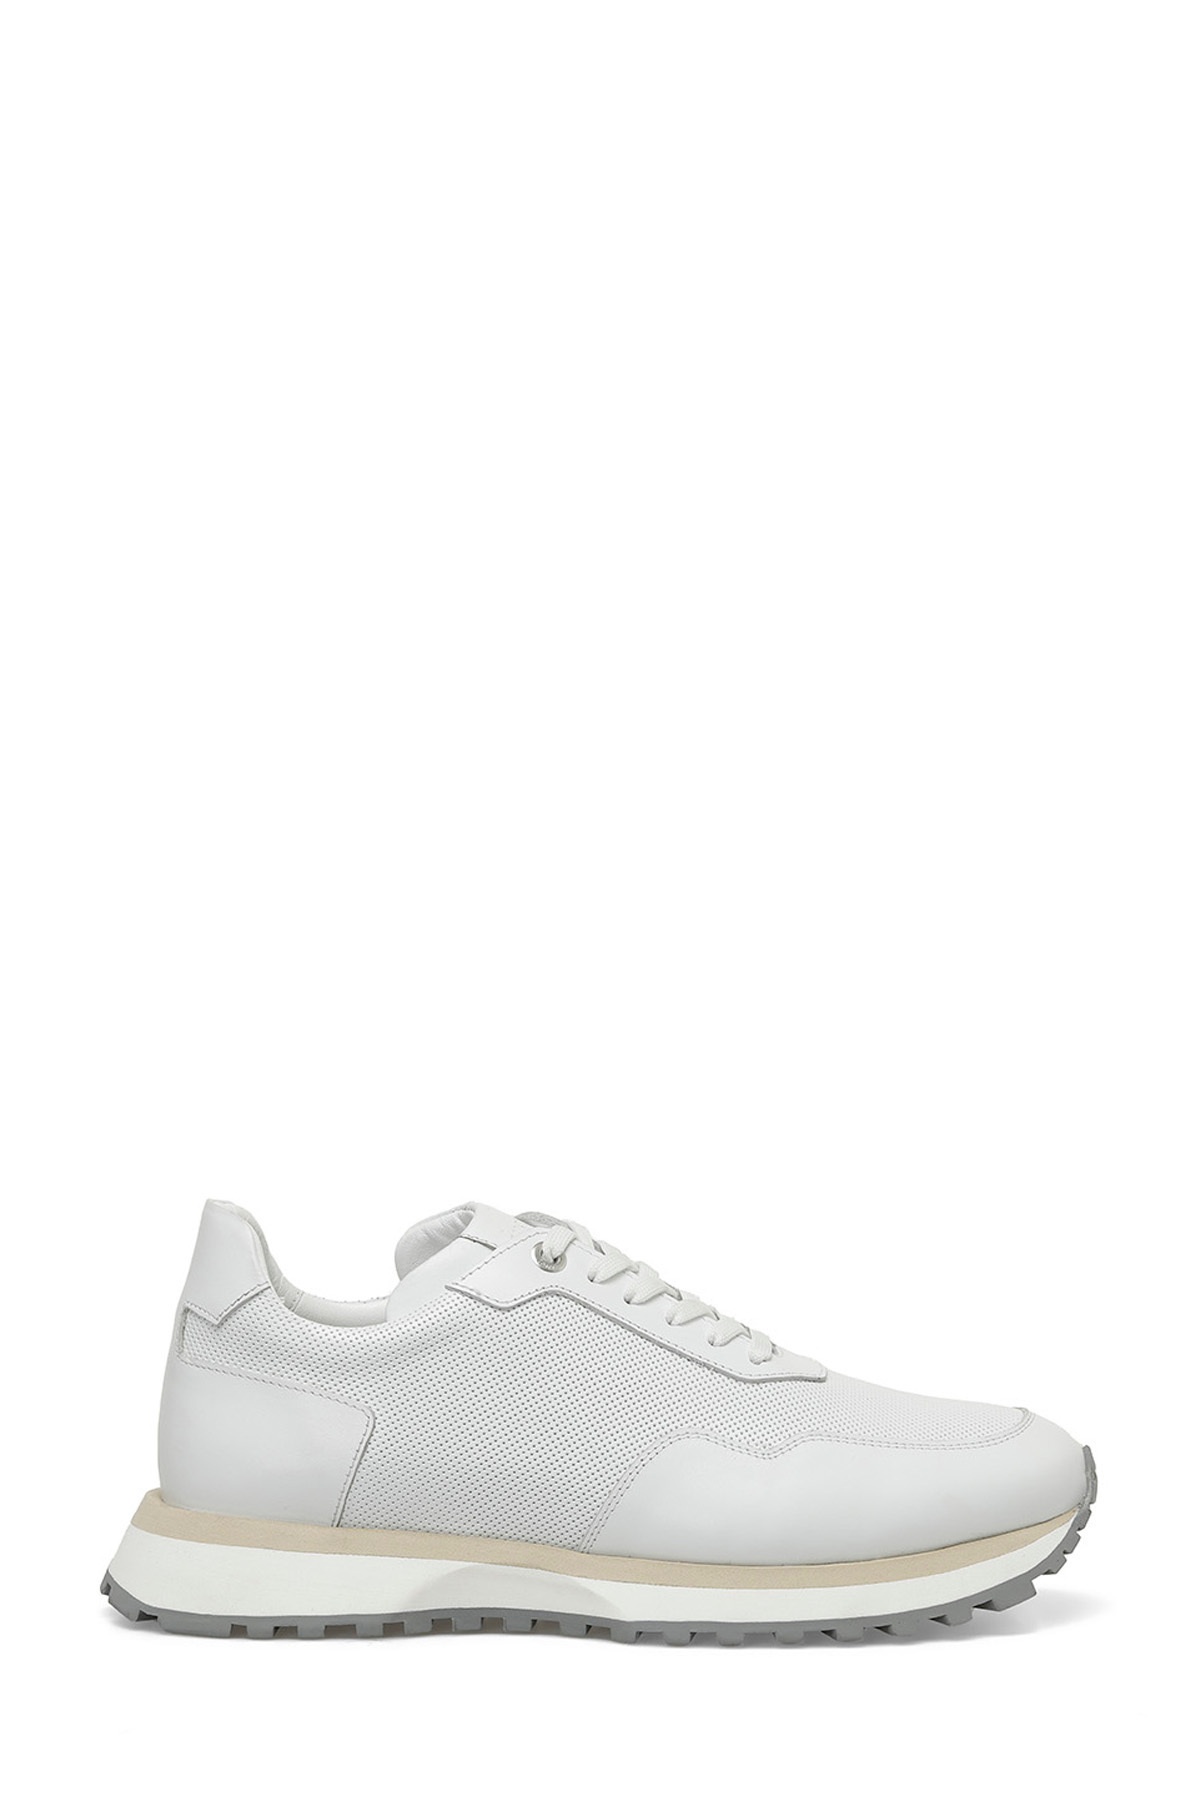 İnci INCI MIBYA 4FX White Men's Sports Shoes